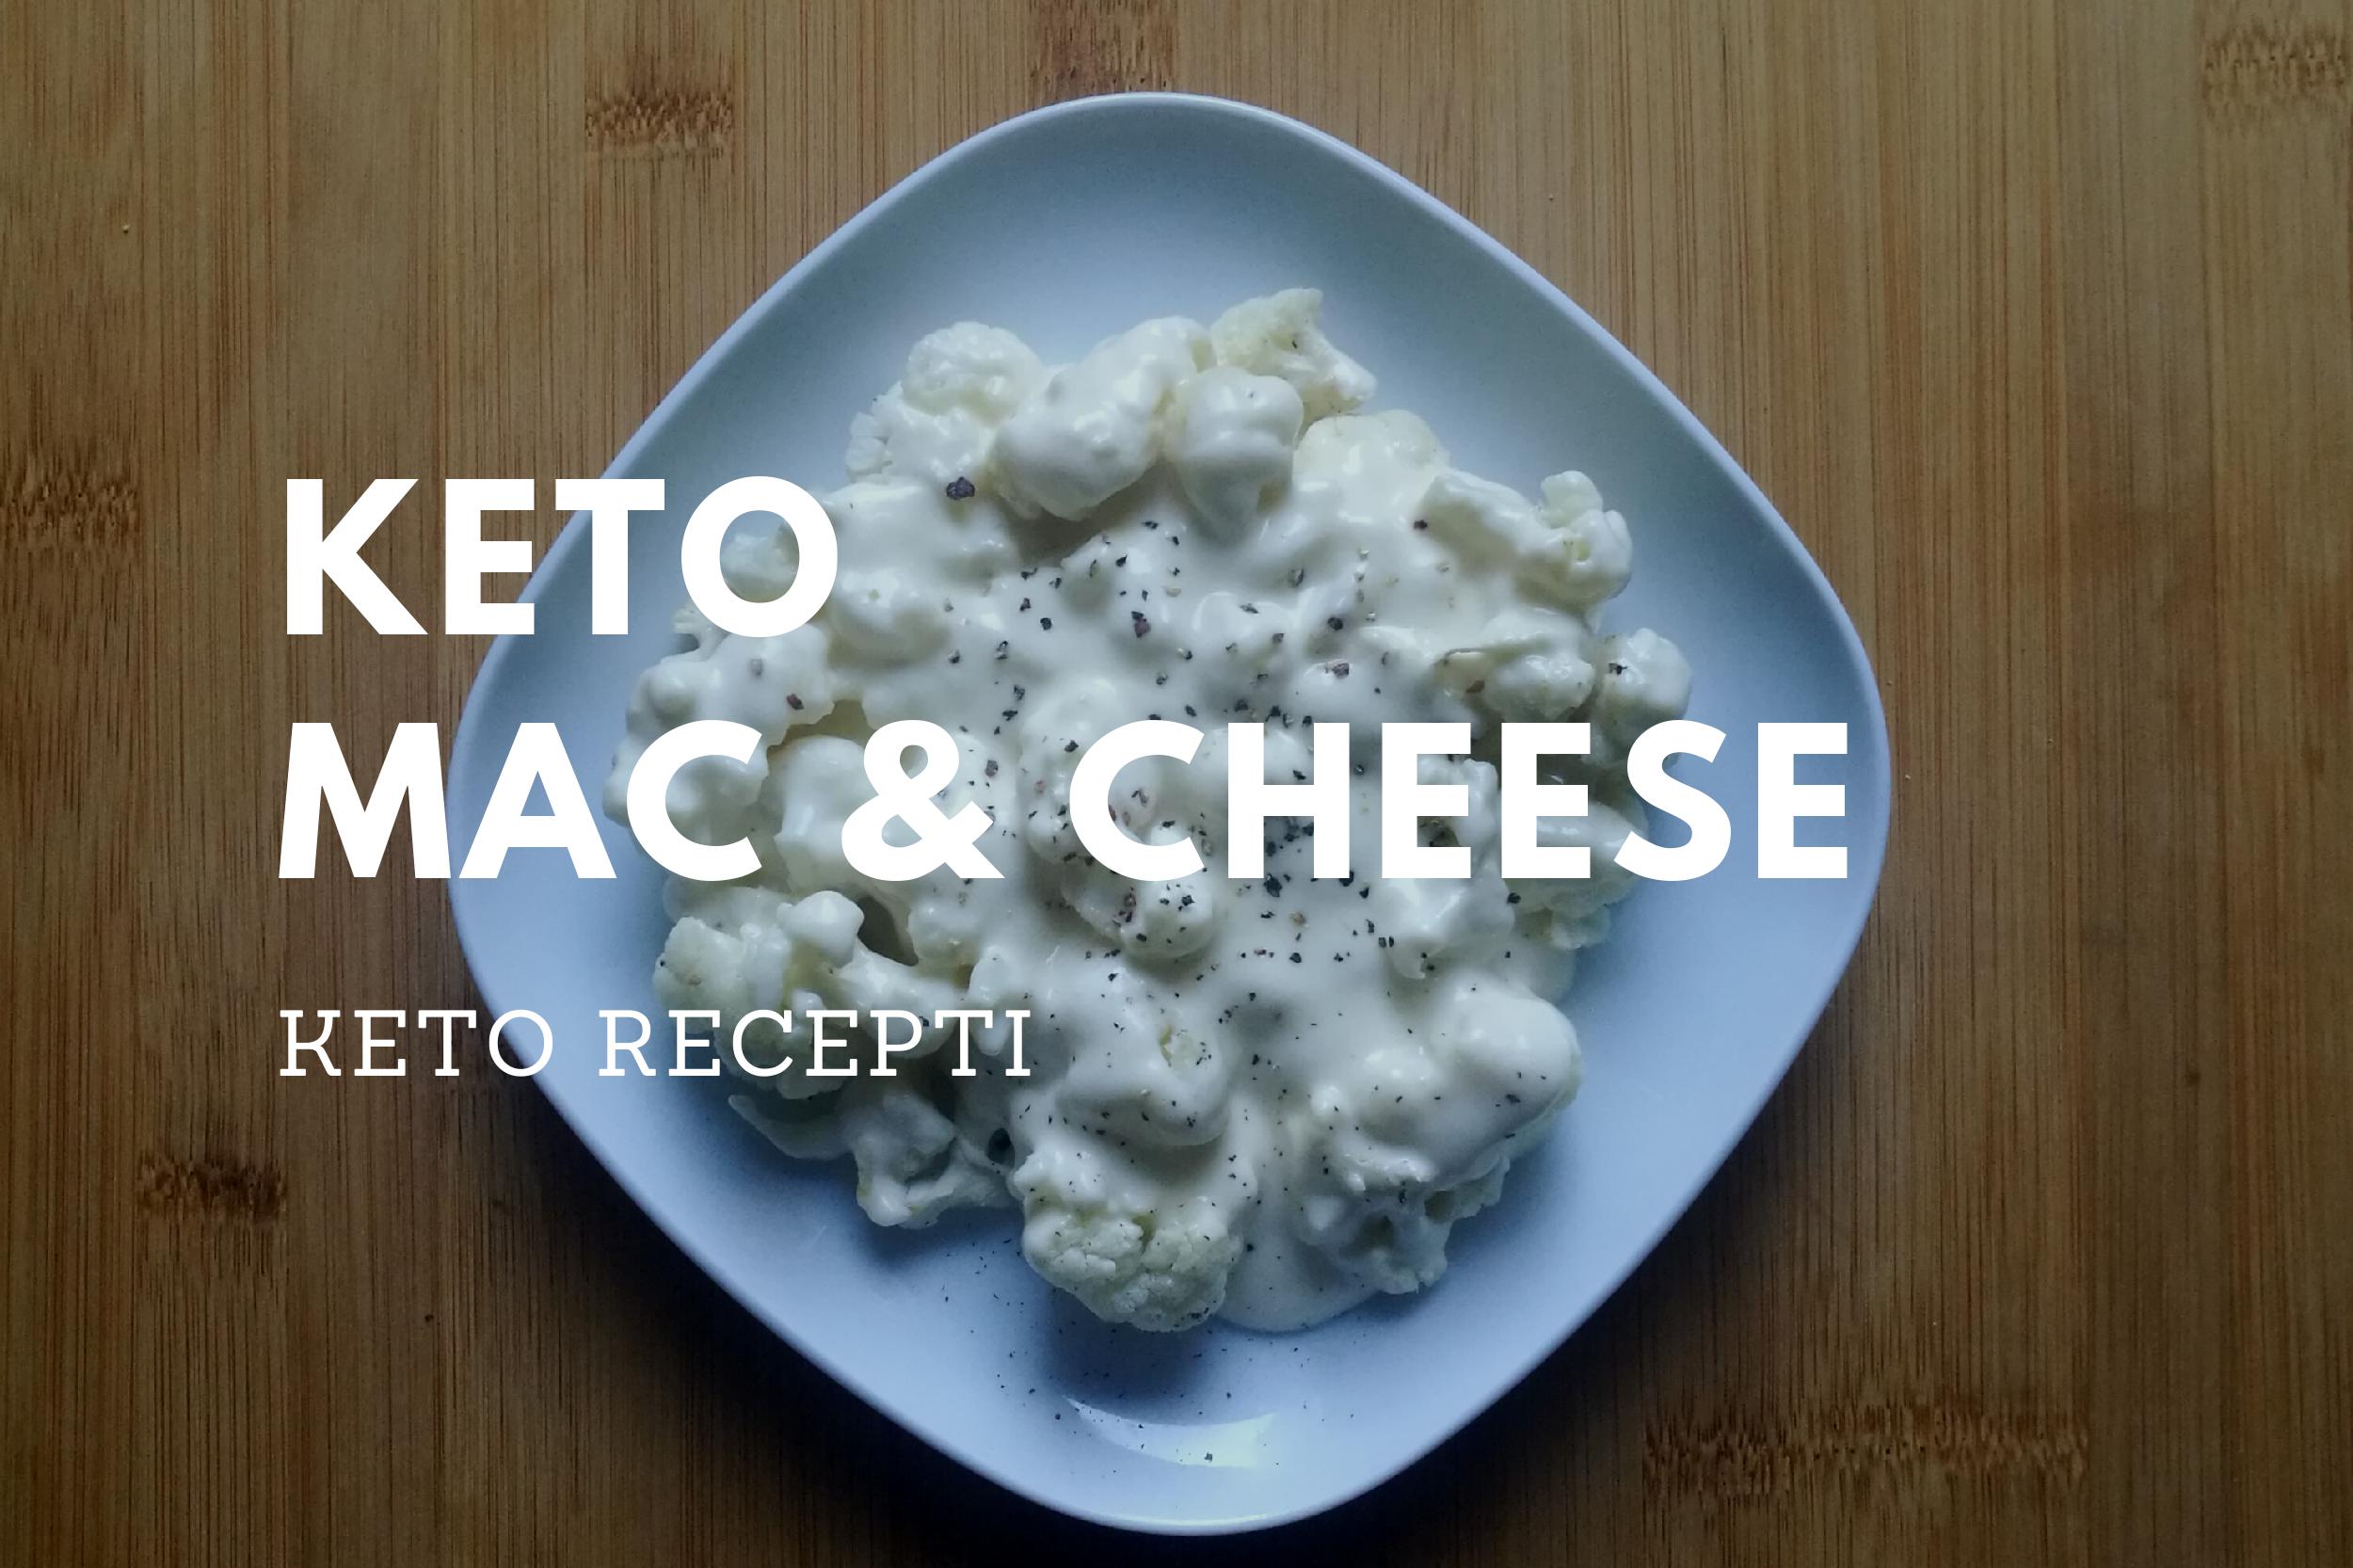 Keto mac & cheese